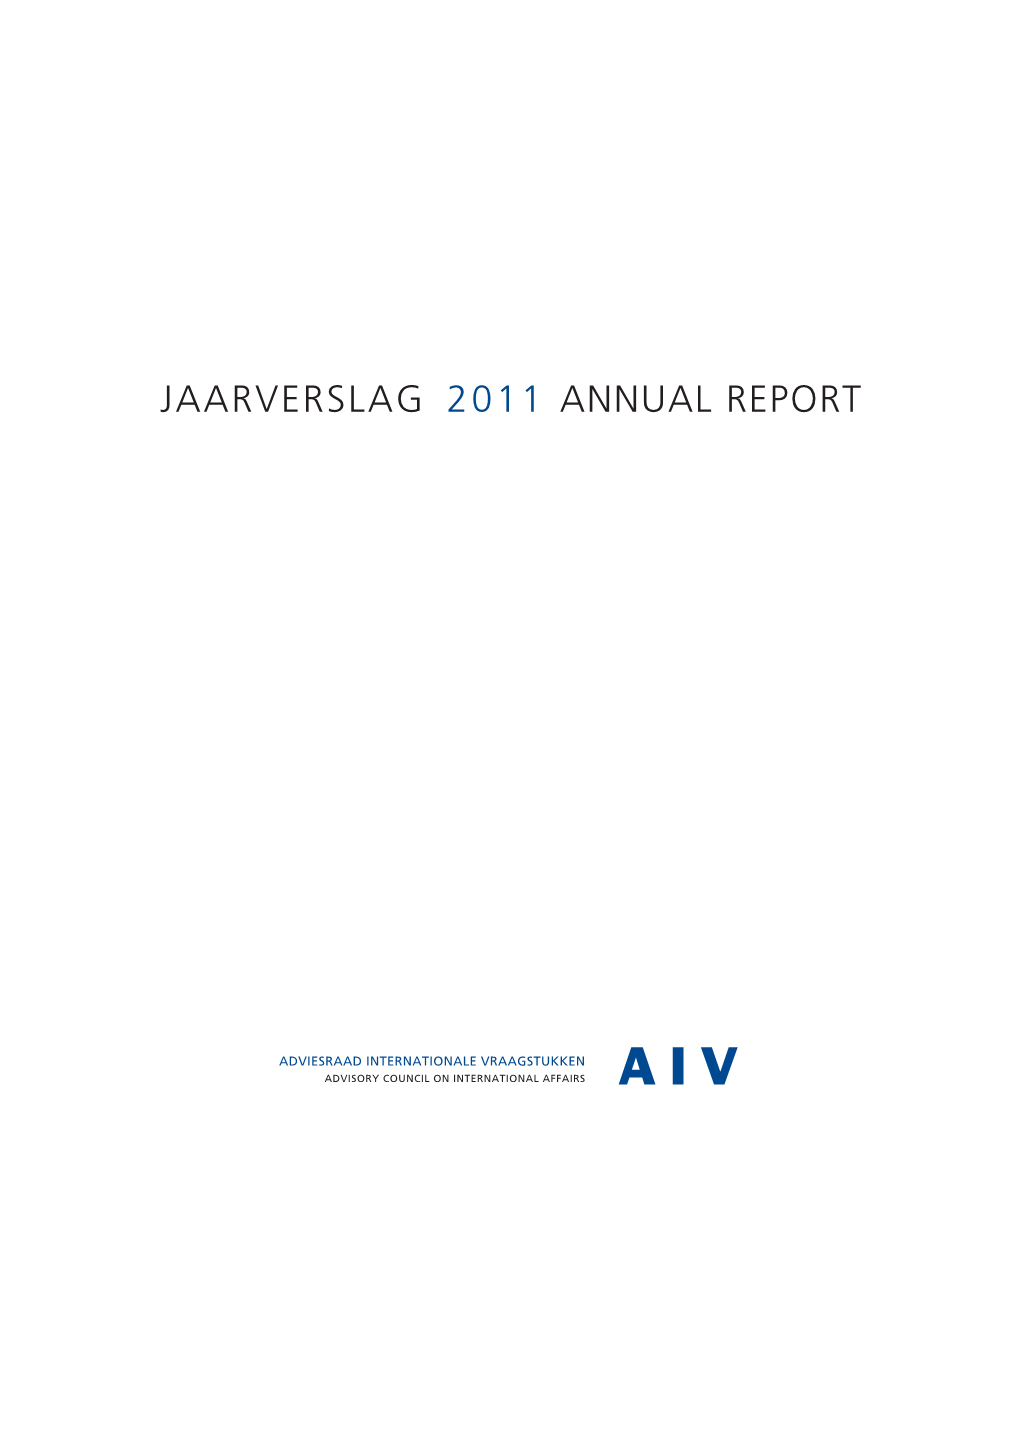 Jaarverslag 2011 Annual Report